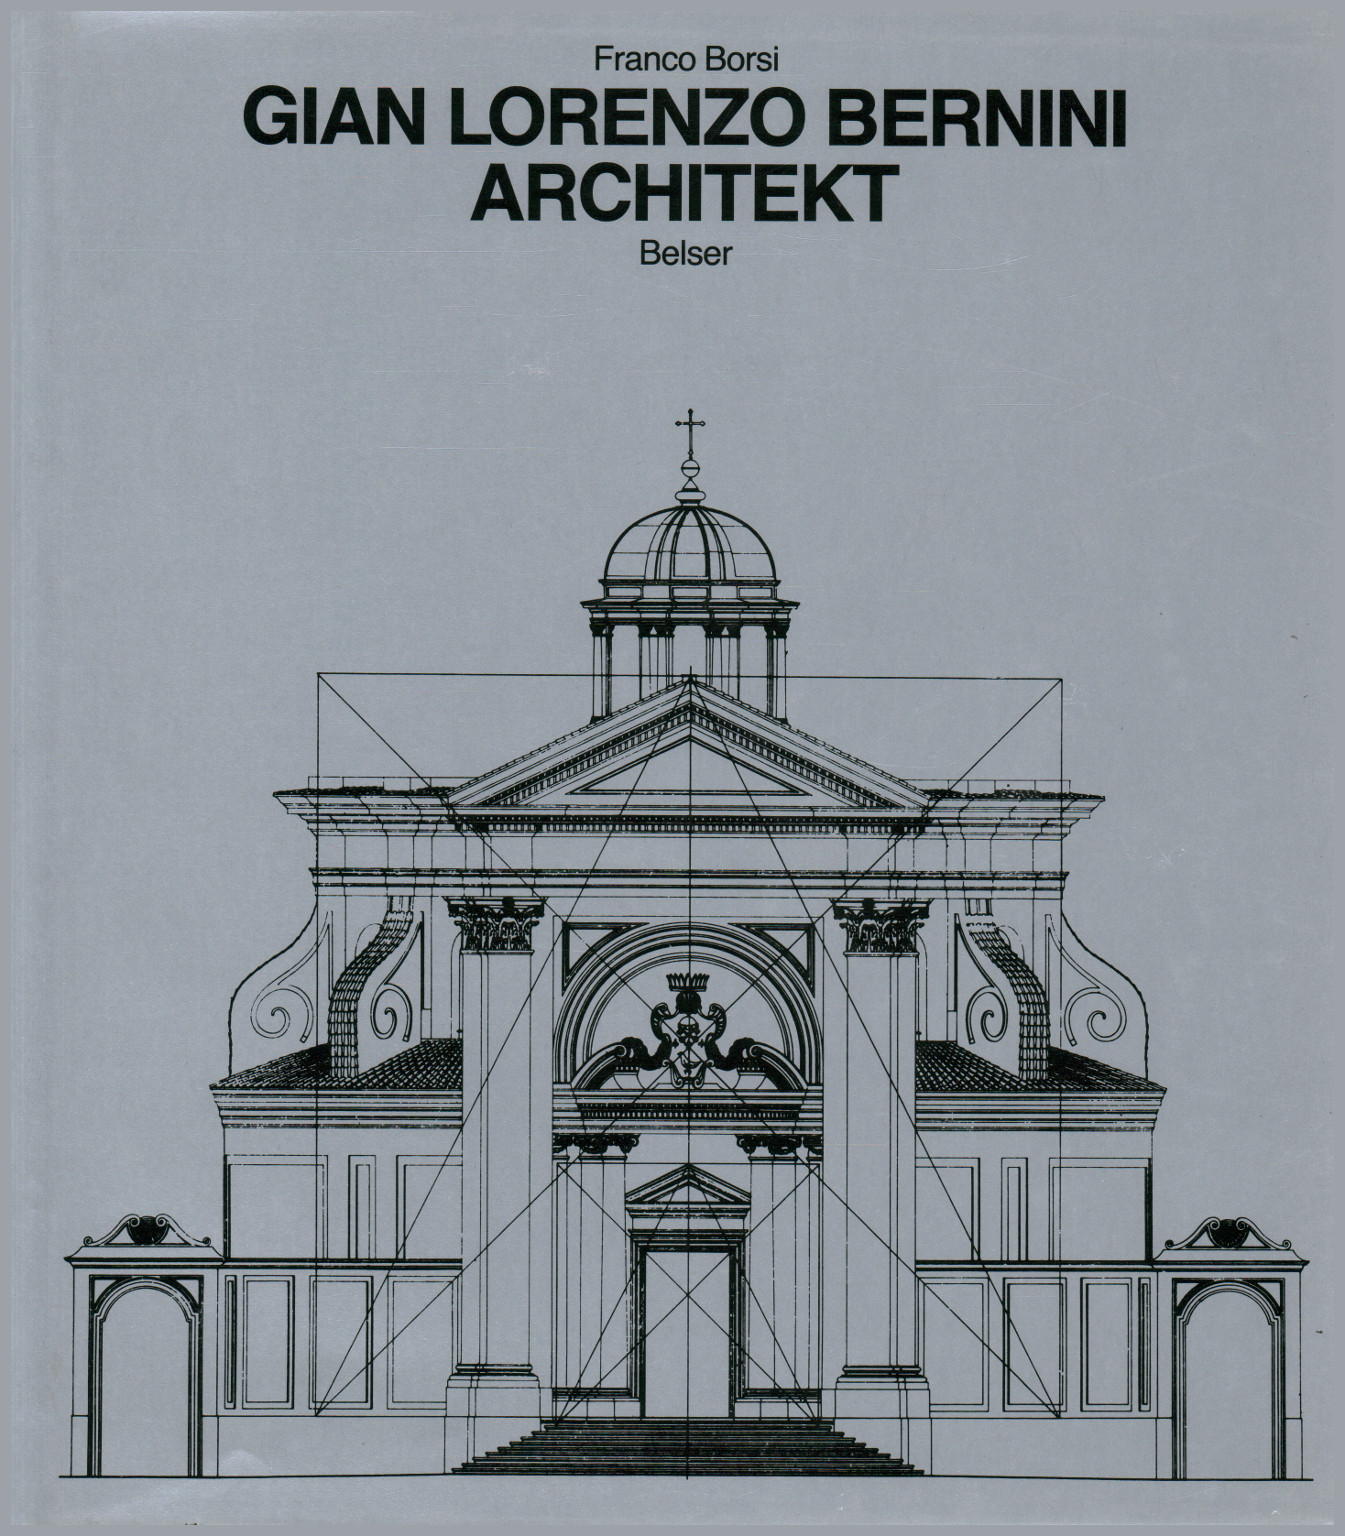 Gian Lorenzo Bernini, Architekt, s.un.